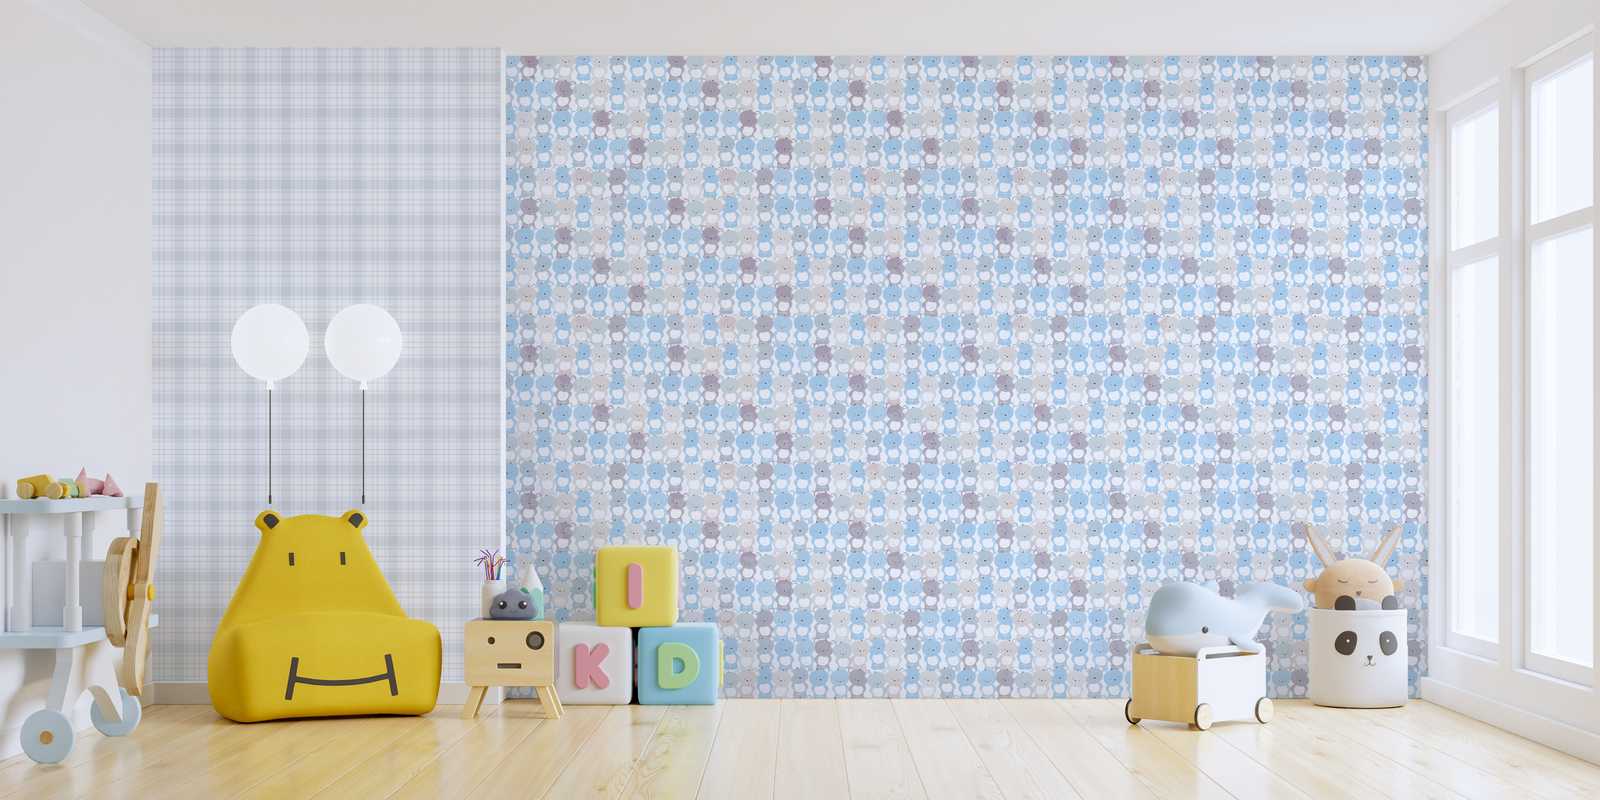             Papel pintado habitación infantil niños a cuadros - azul, gris , blanco
        